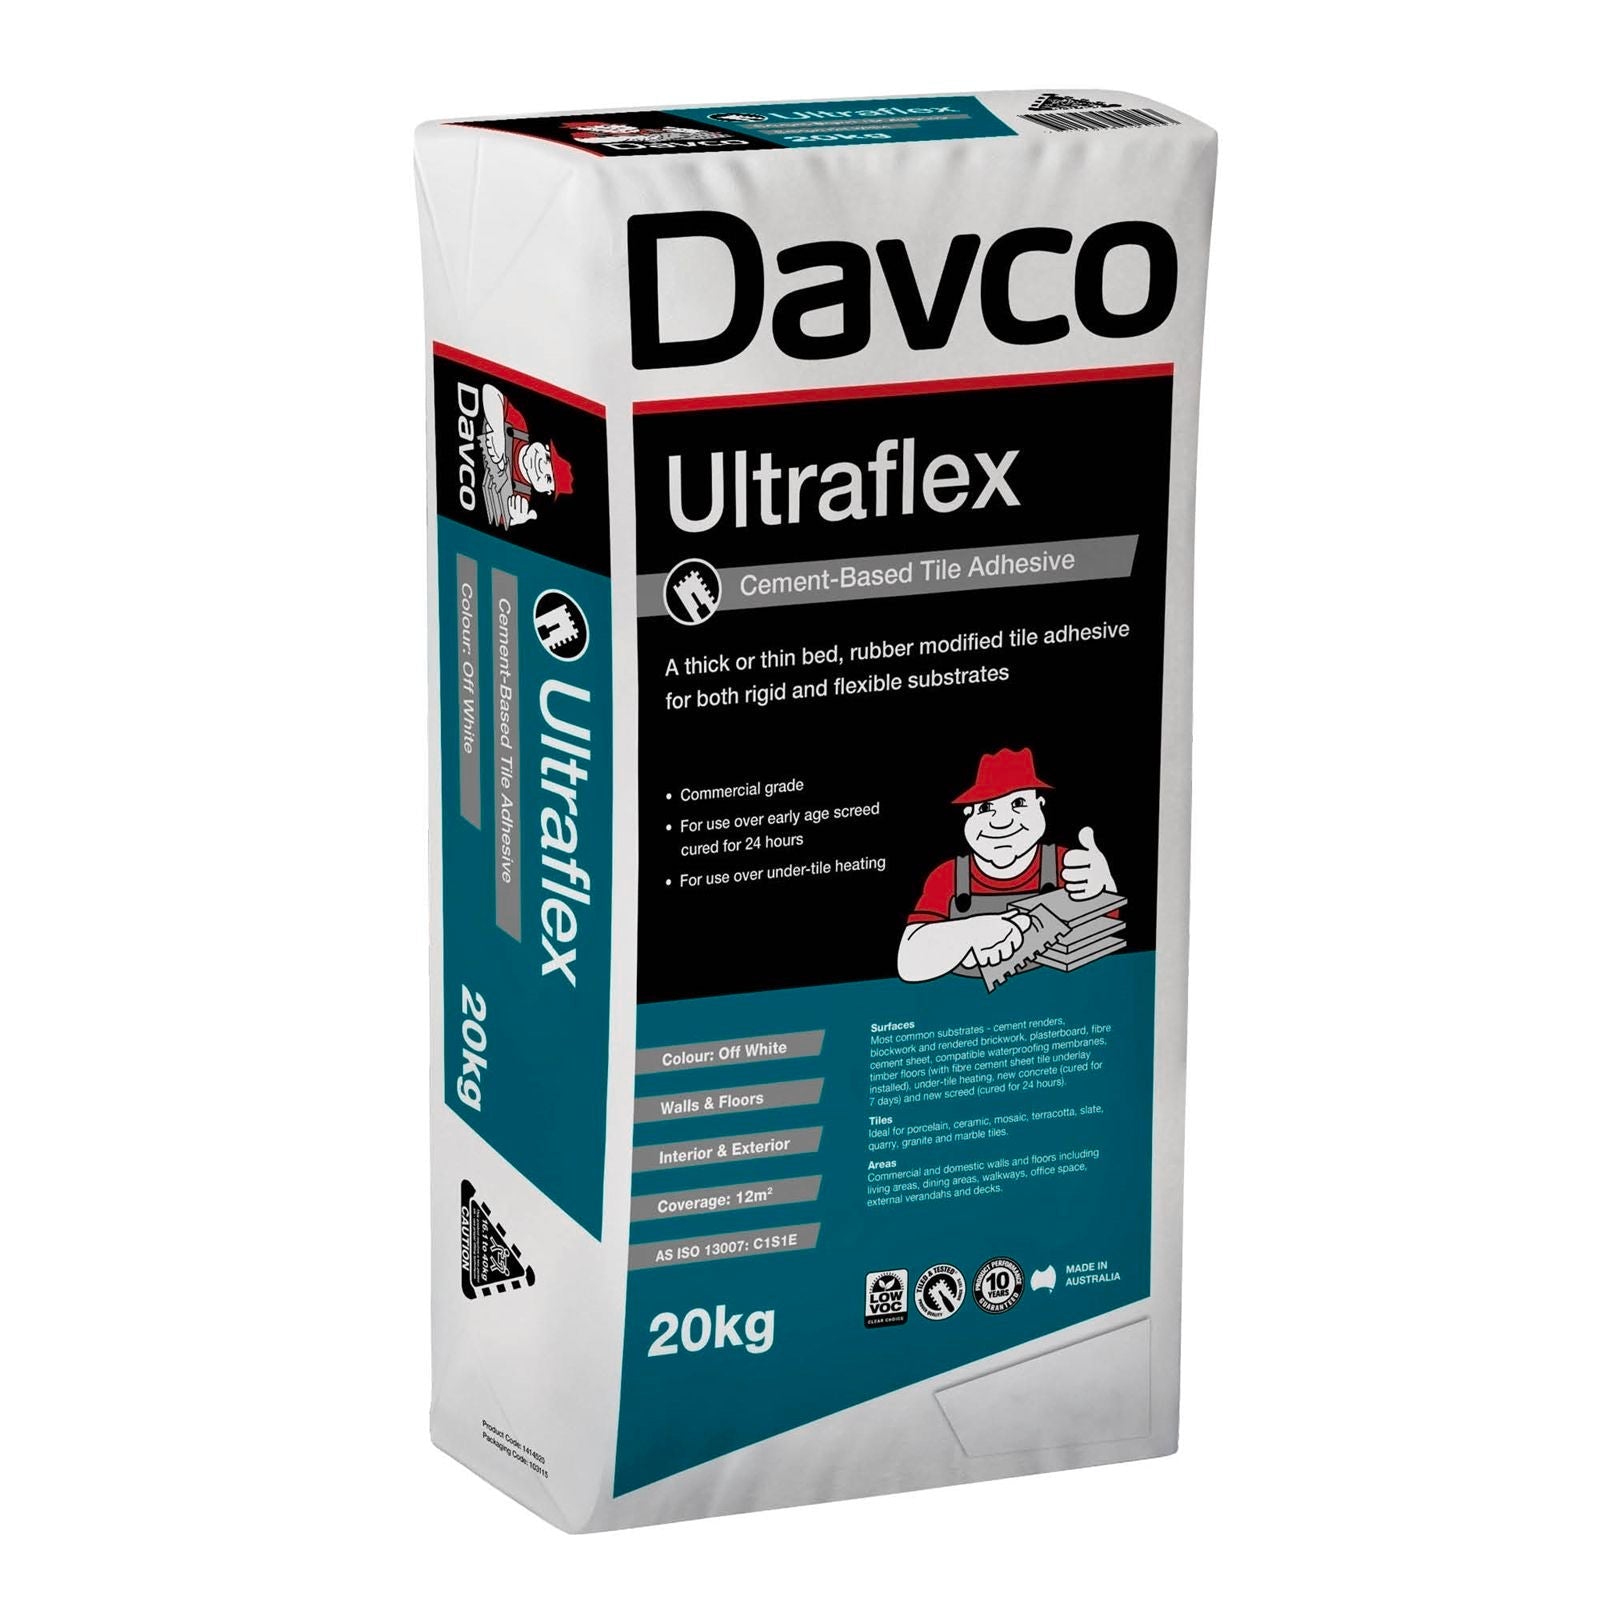 Davco Ultraflex Tile Adhesive White 20kg 618643 - Double Bay Hardware